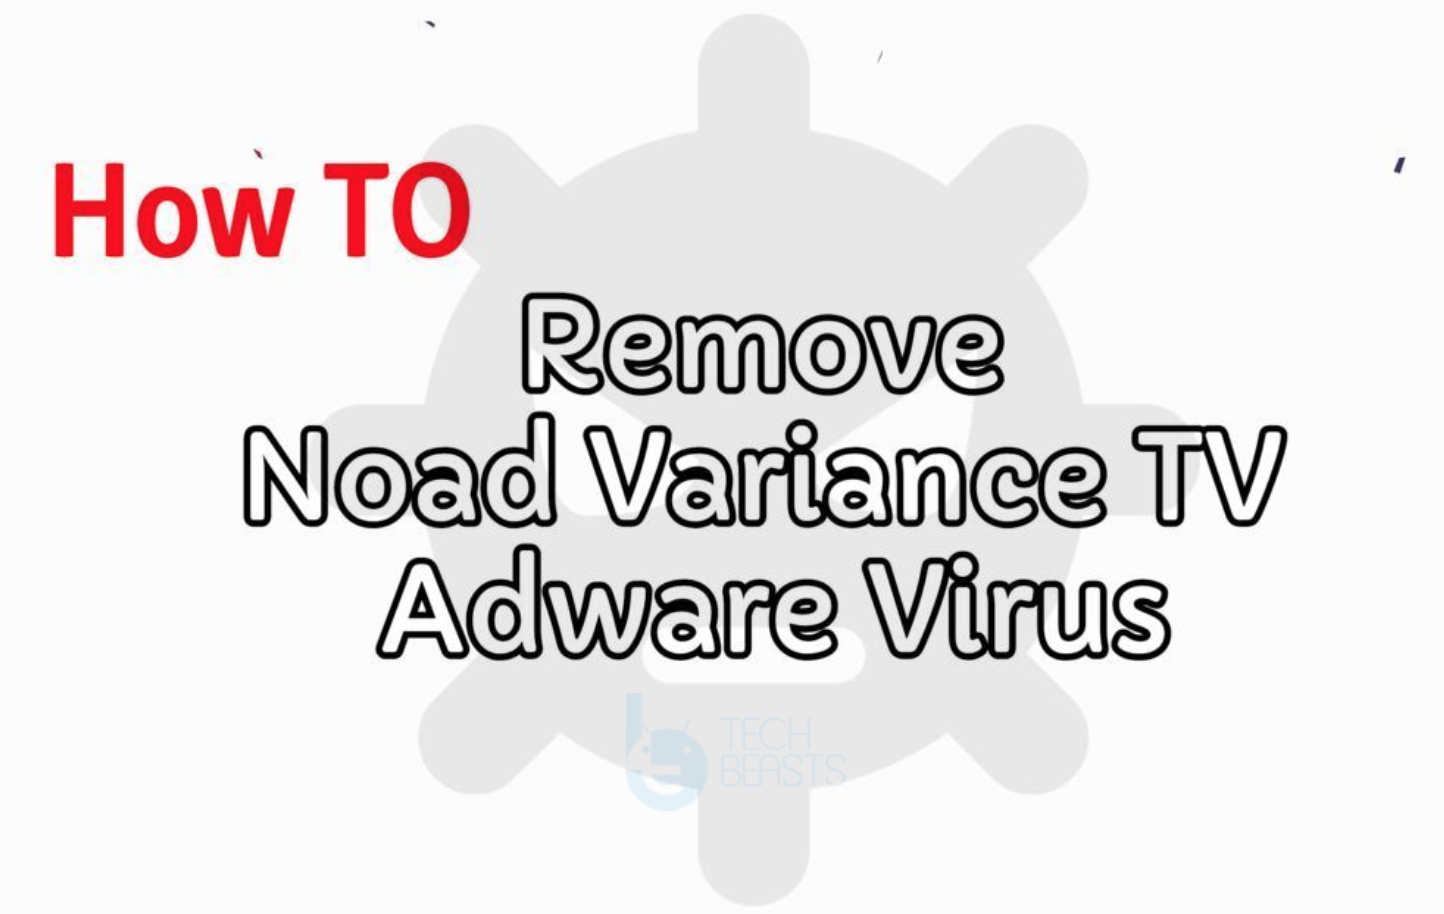 Noad Variance TV Adware Virus